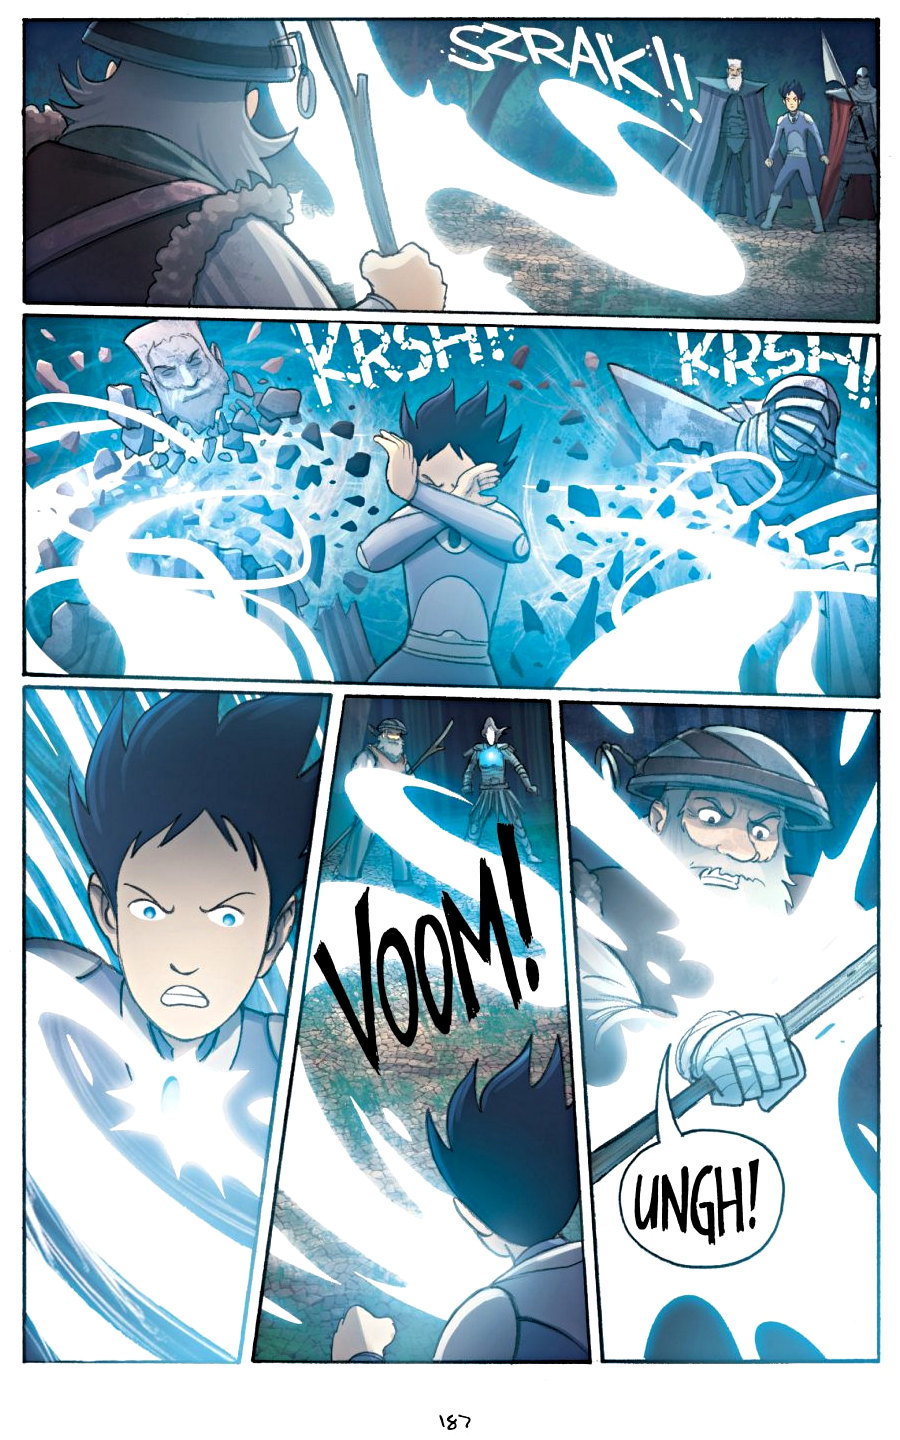 page 187 of amulet 4 last council graphic novel by kazu kibuishi